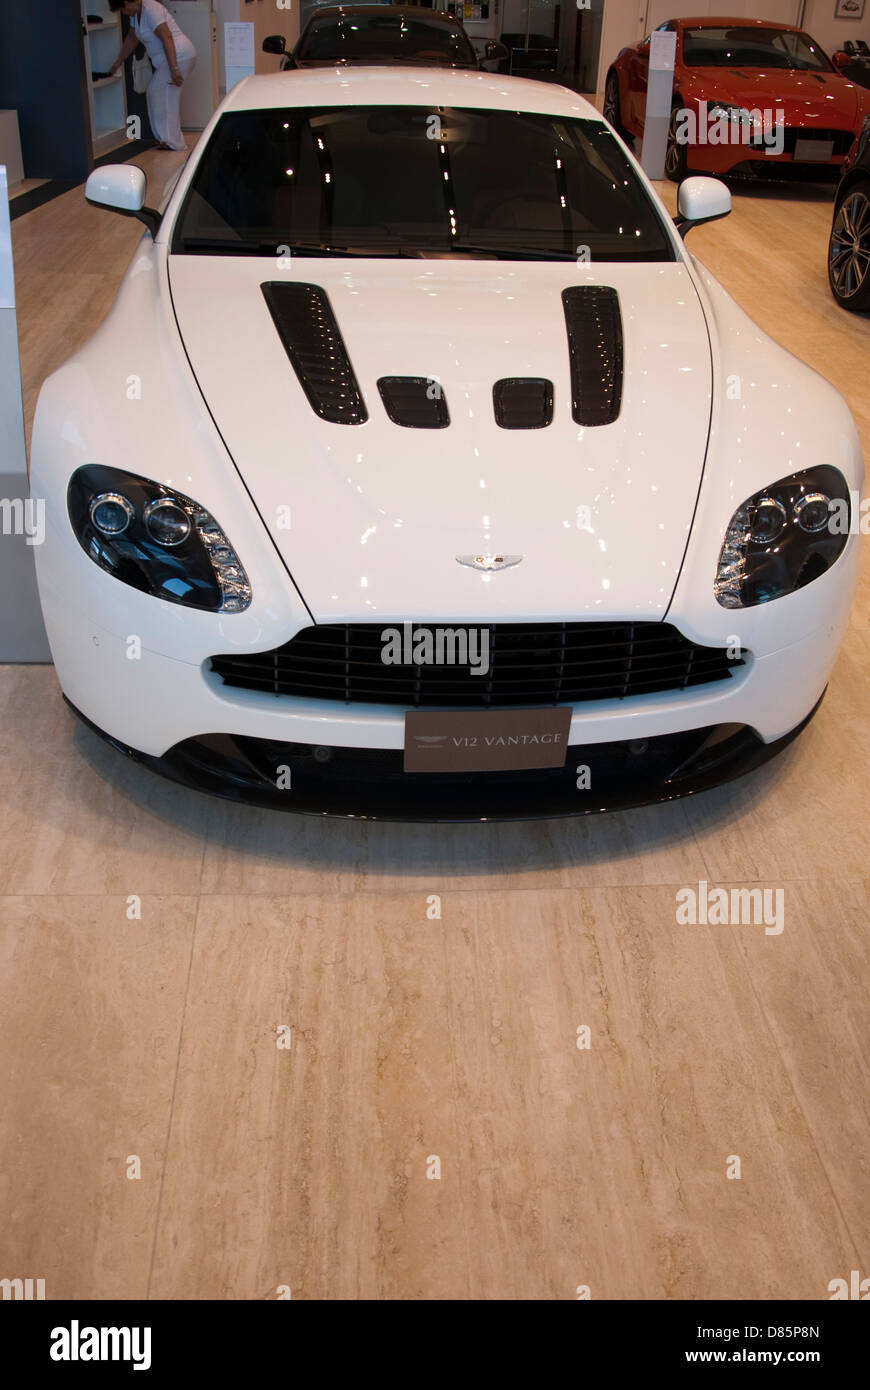 2013 White Aston Martin V12 Vantage Sports Coupe Sportscar Stock Photo